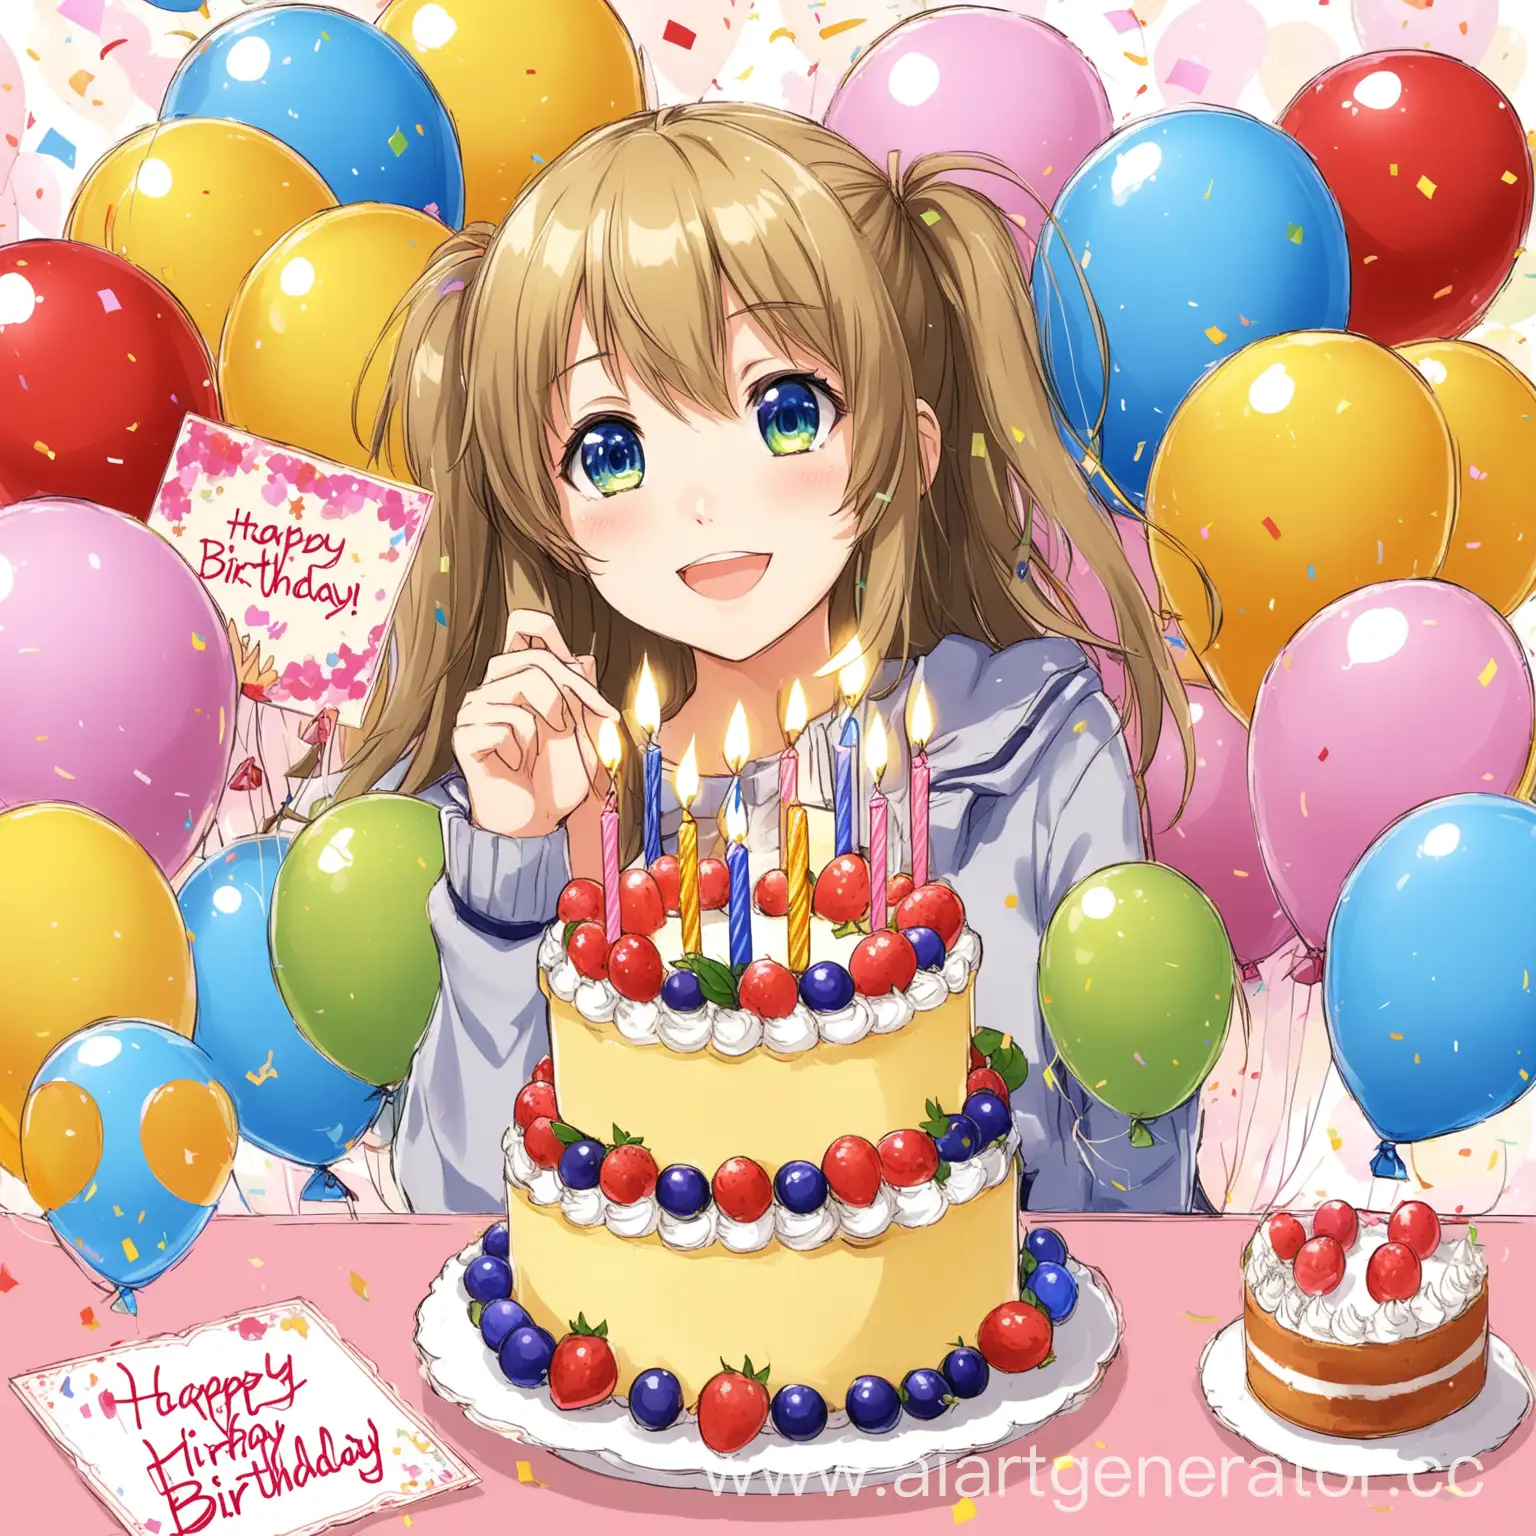 Celebratory-Birthday-Card-with-Anime-Girl-Balloons-and-Cake